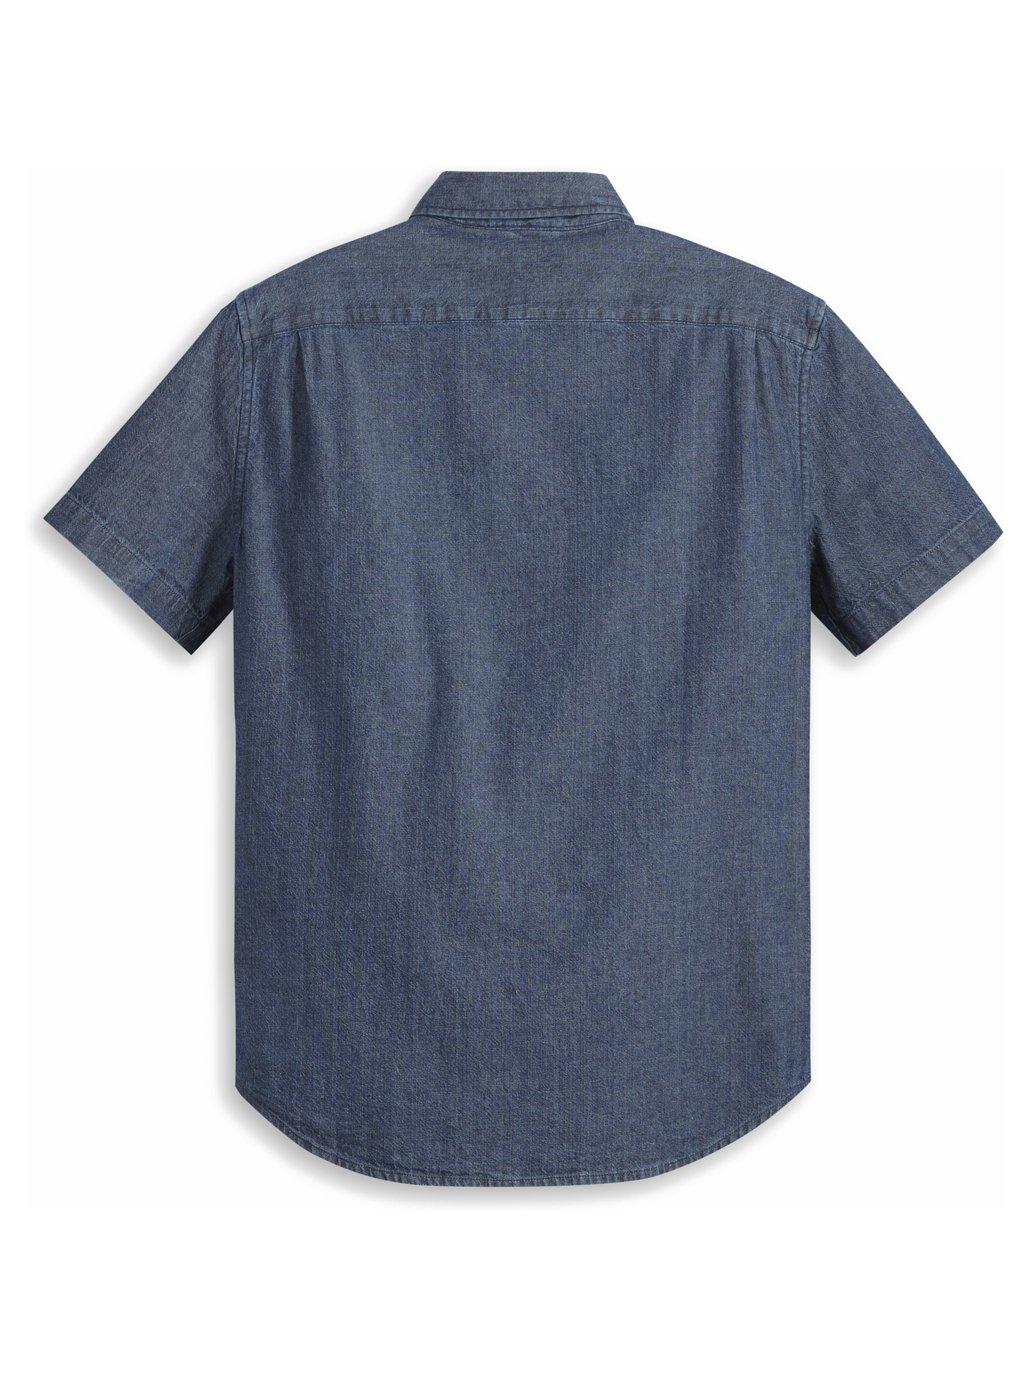 Buy Levi's® Men's Short-Sleeve Classic Standard Fit Shirt| Levi's ...